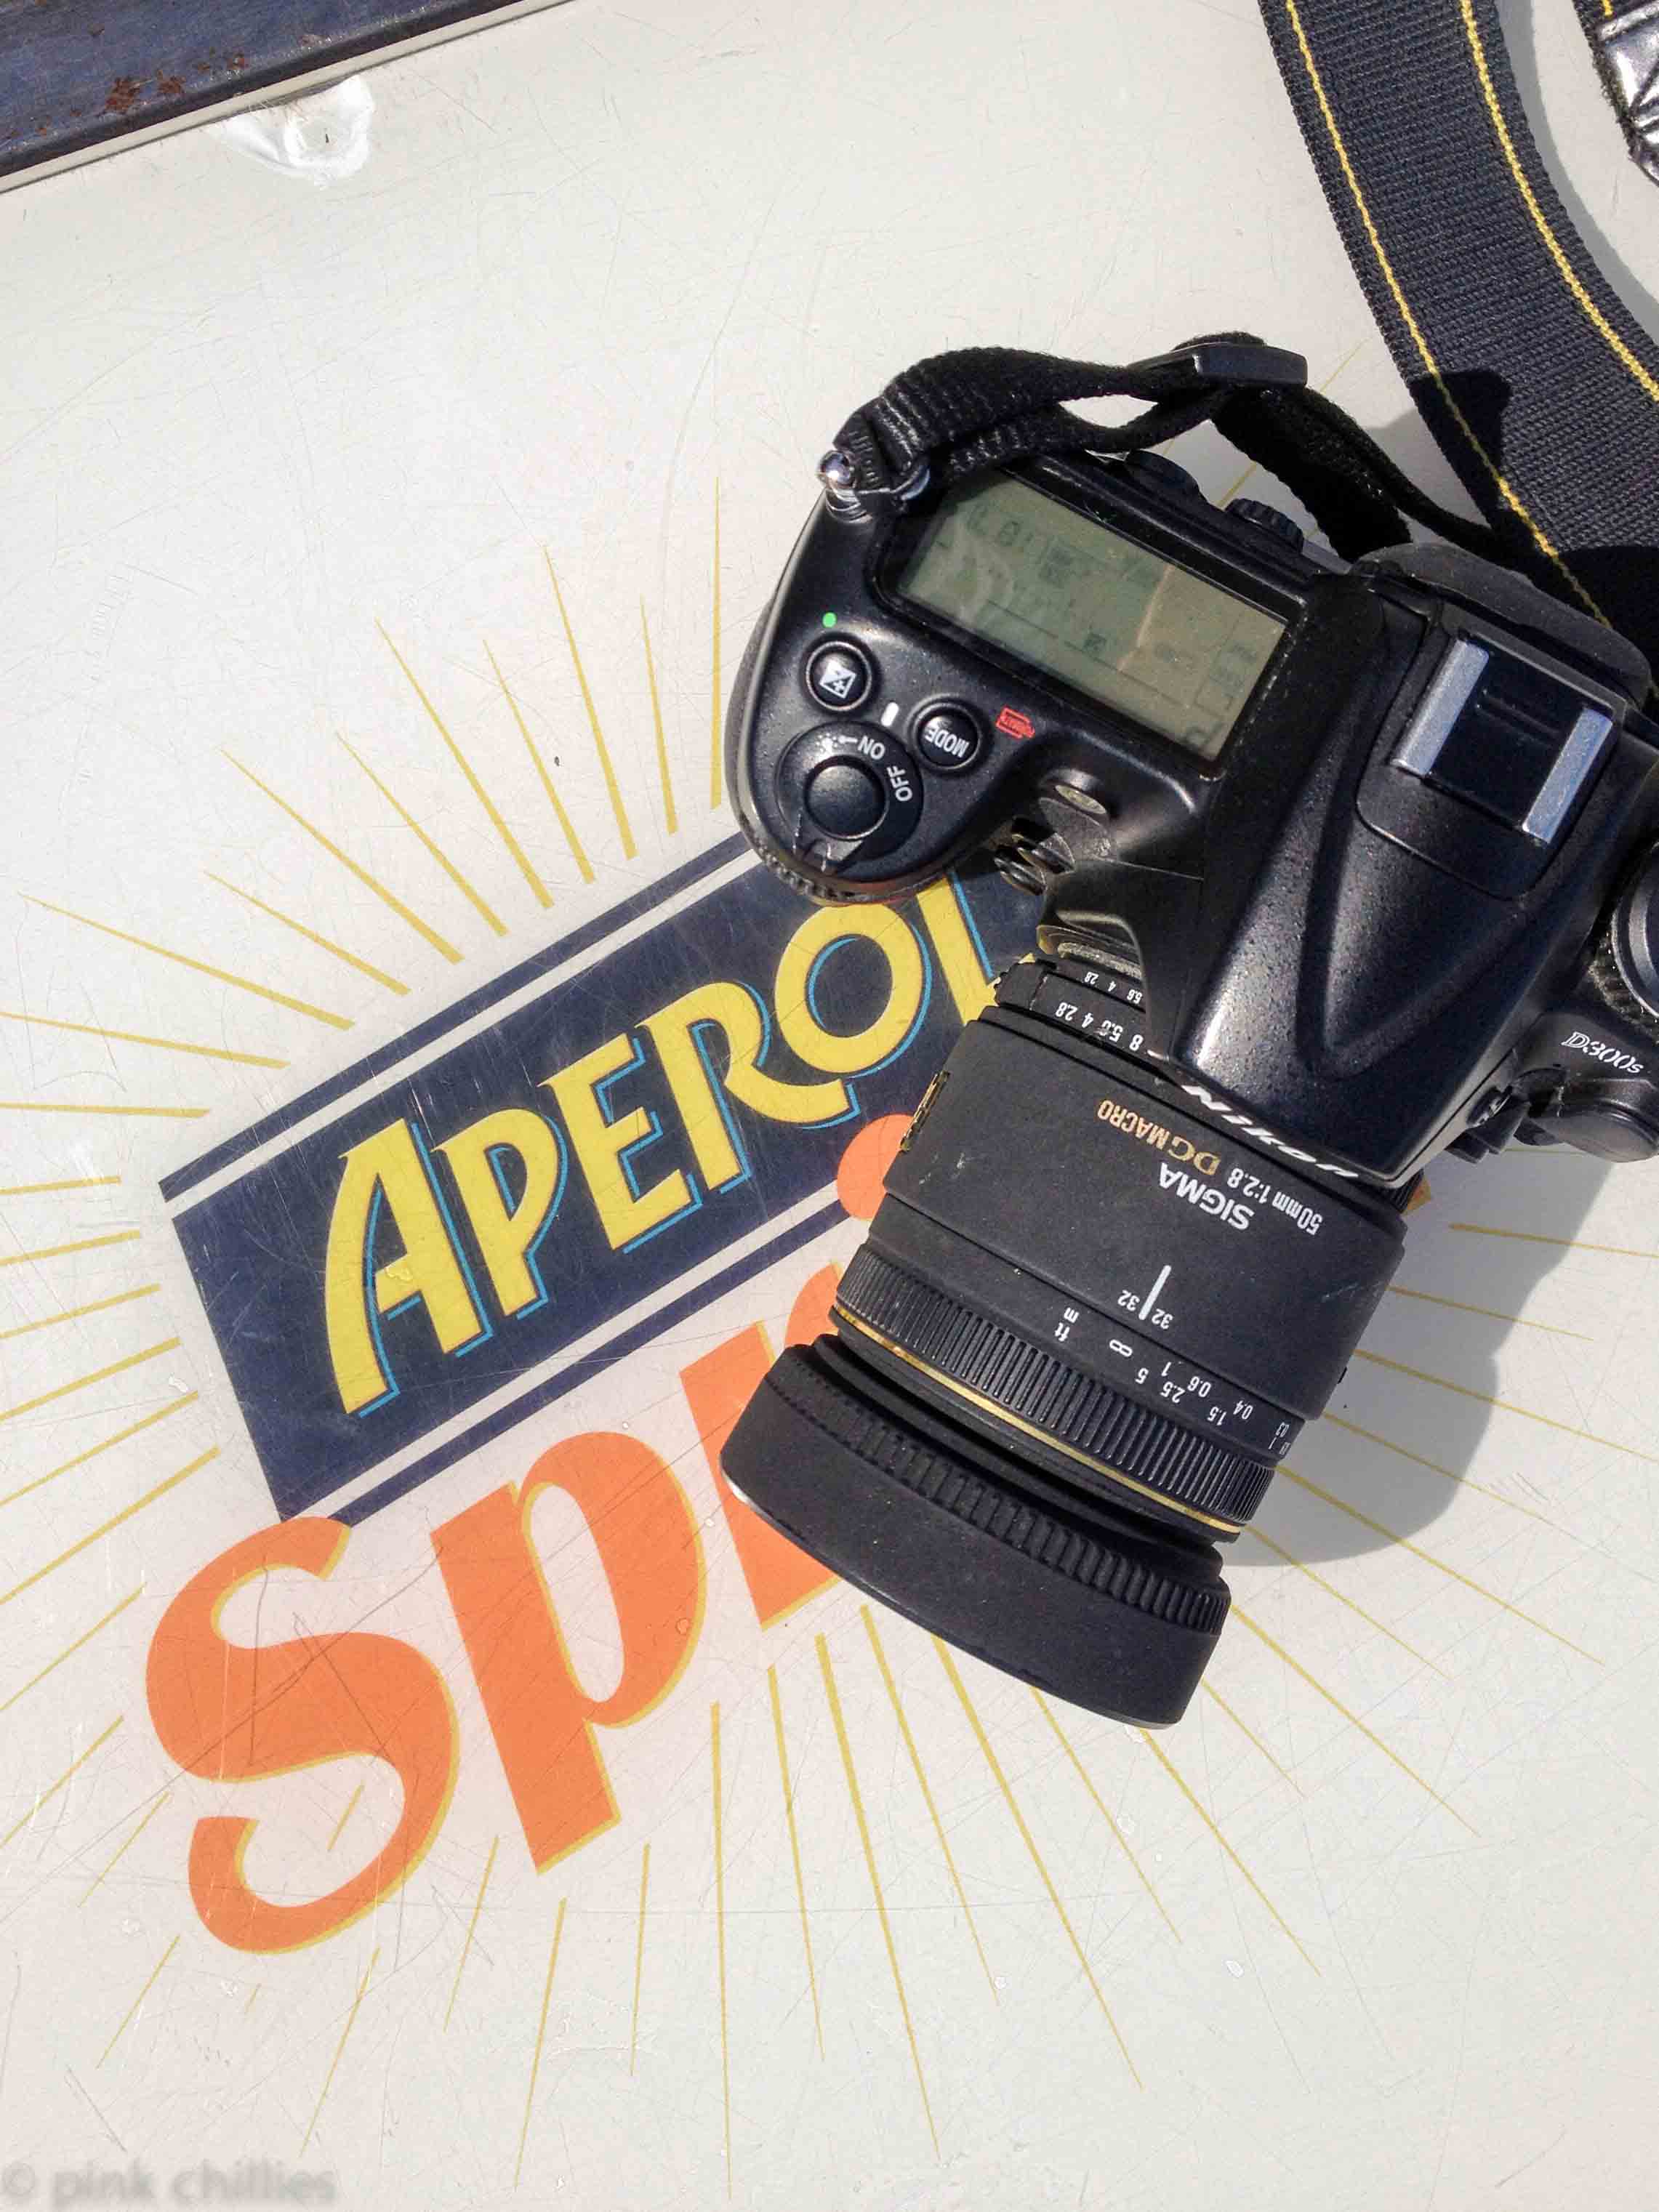 Nikon und Aperol SPritz